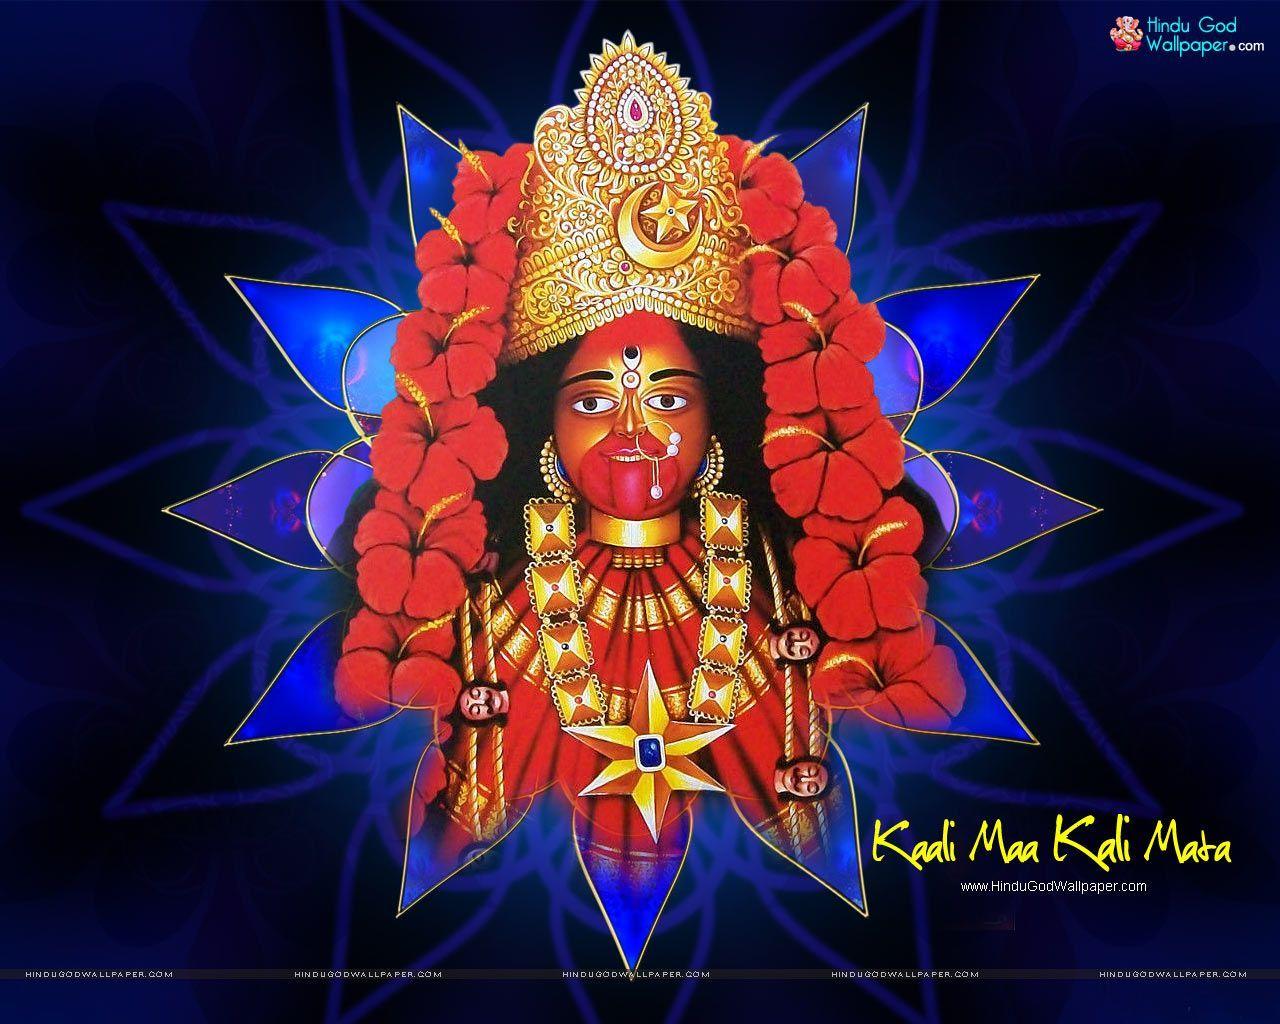 Maa Kali Wallpaper For Facebook  Hindu Gods and Goddesses